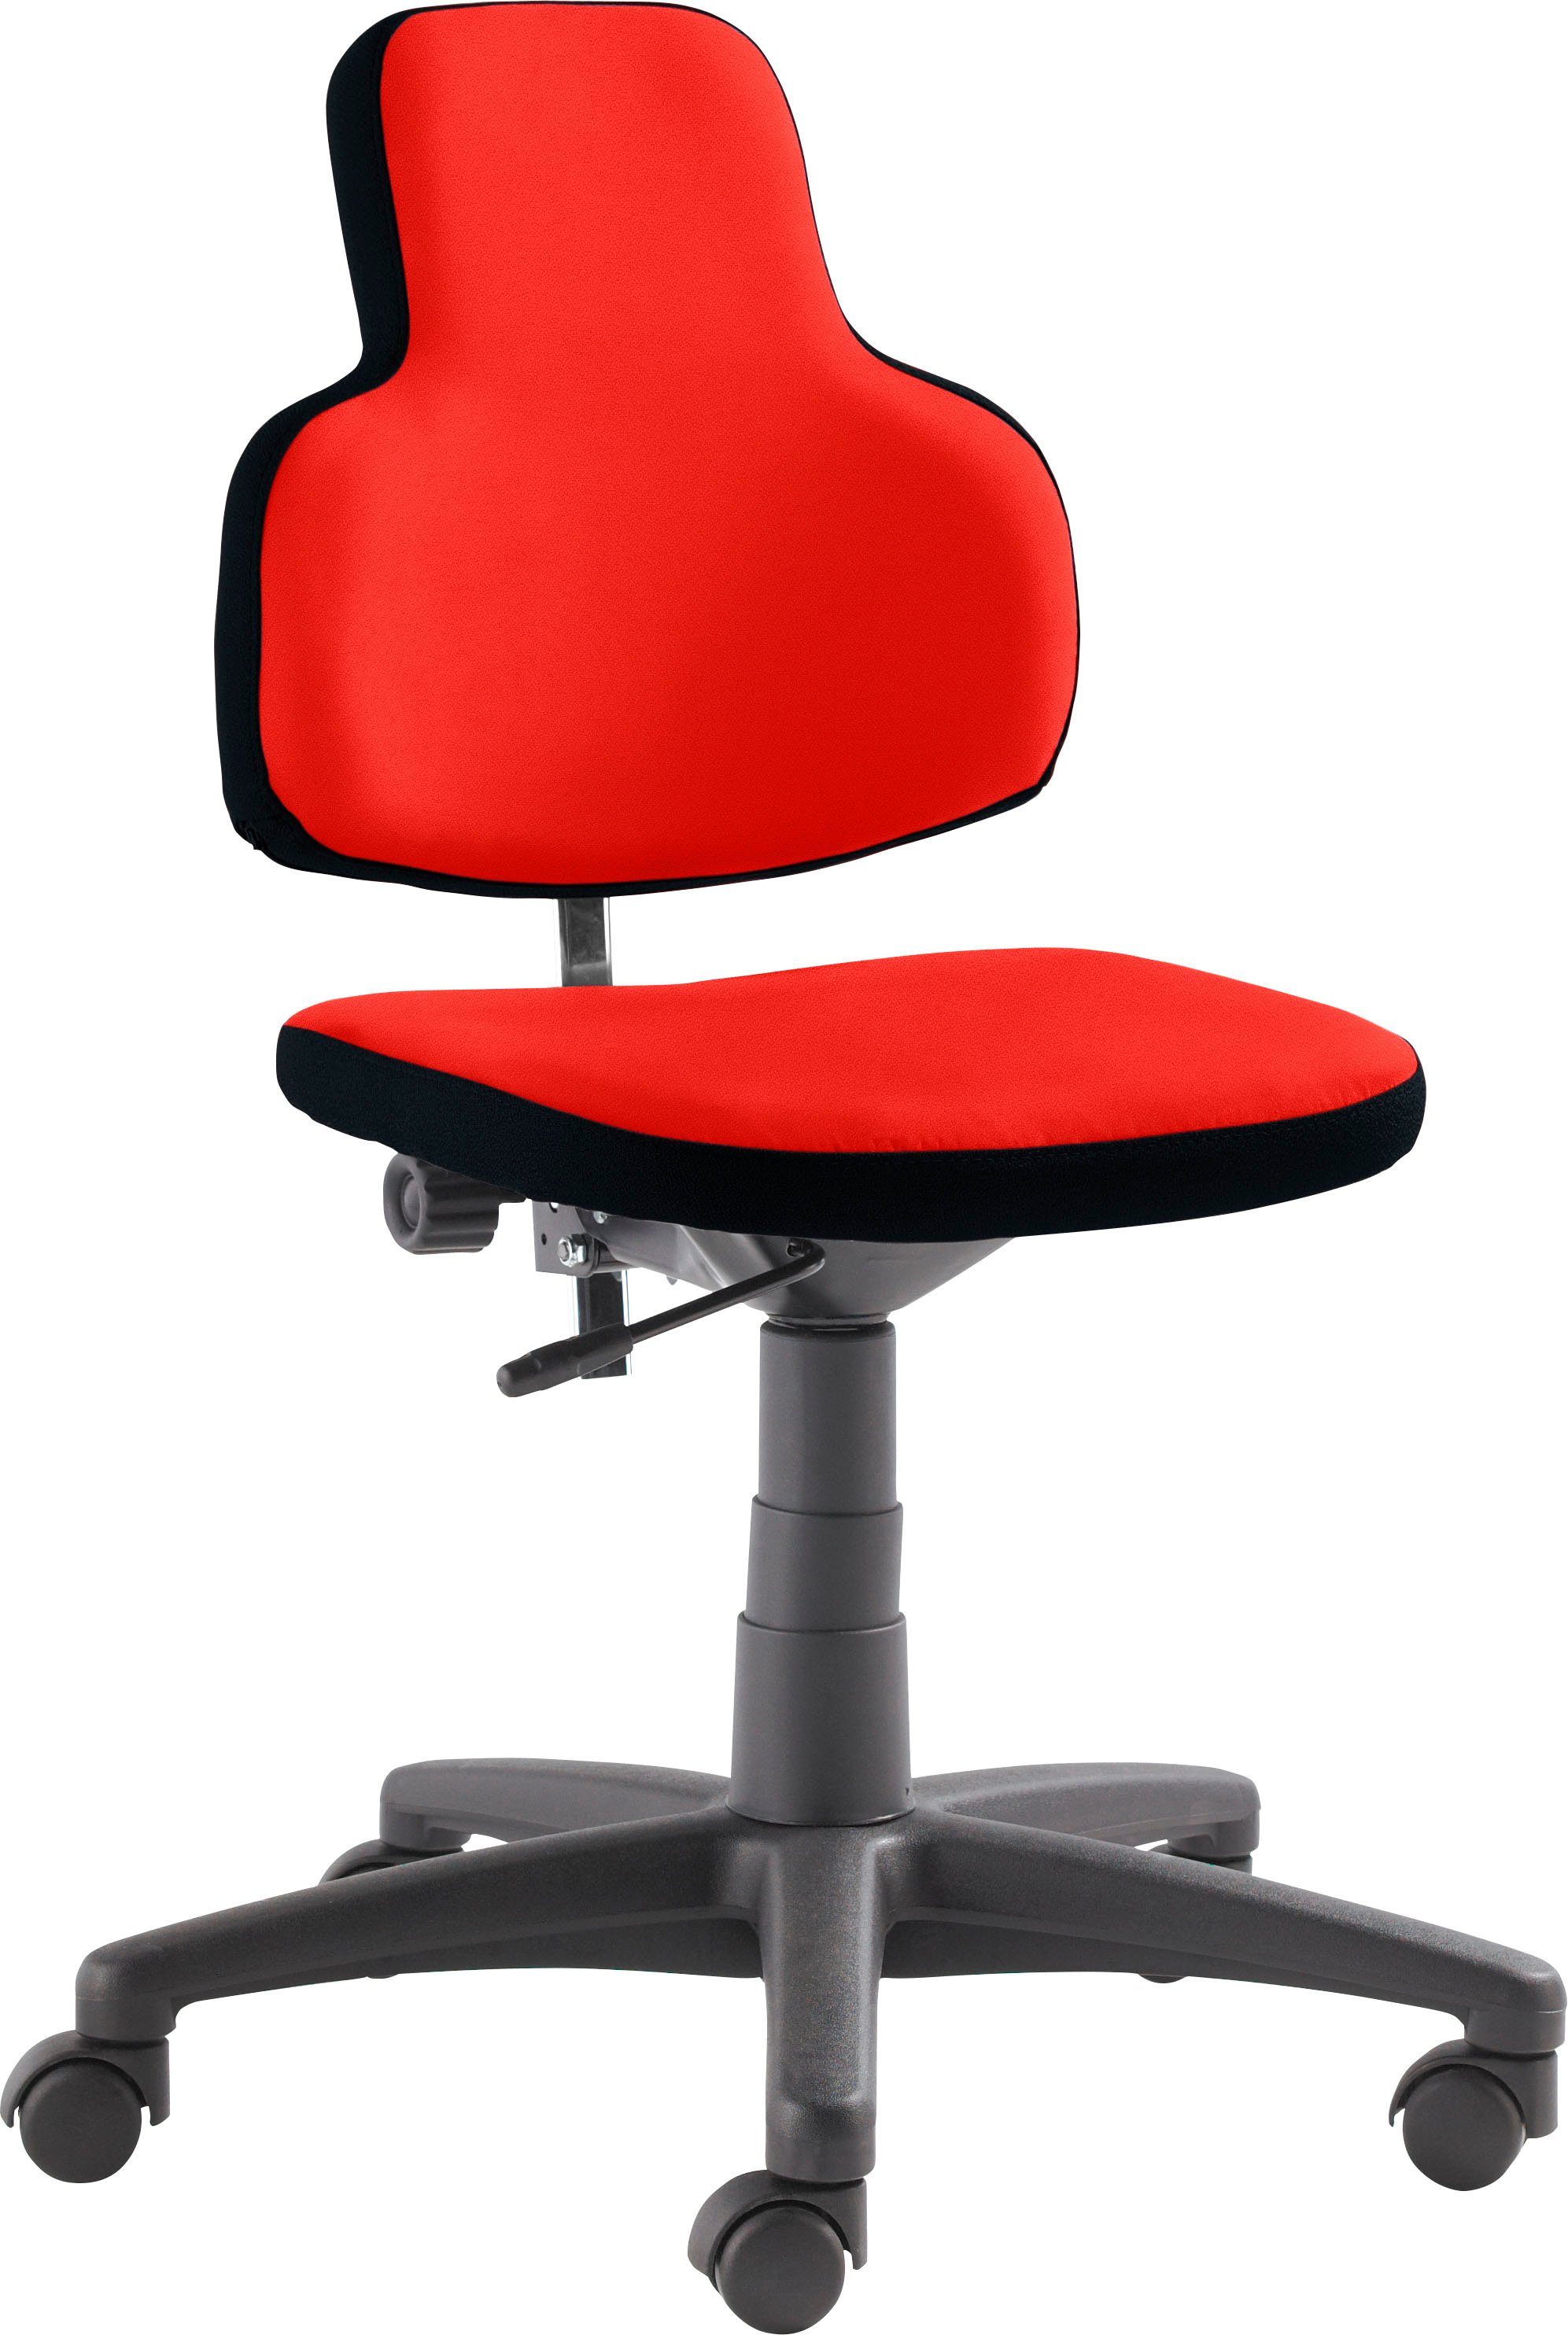 mitwachsend Kinderdrehstuhl Rot myONE, | Sitzmöbel Mayer Bürostuhl rot/schwarz